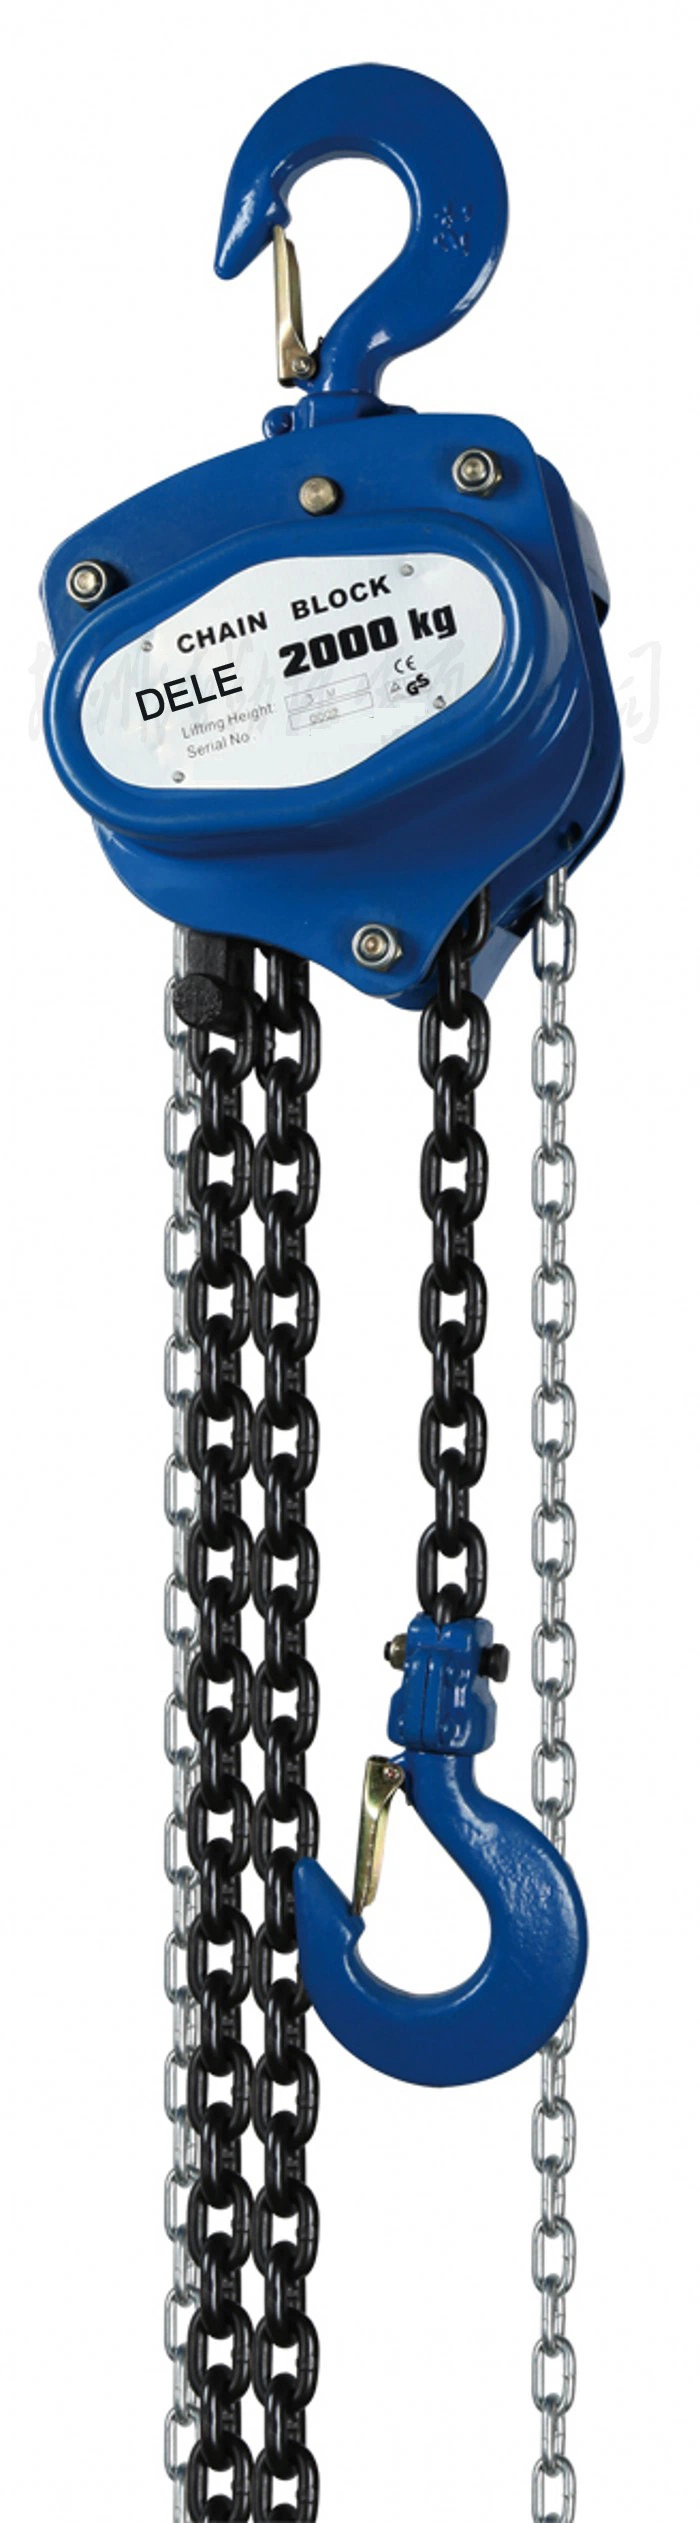 Popular Chain Block Manual Hoists Chain Block